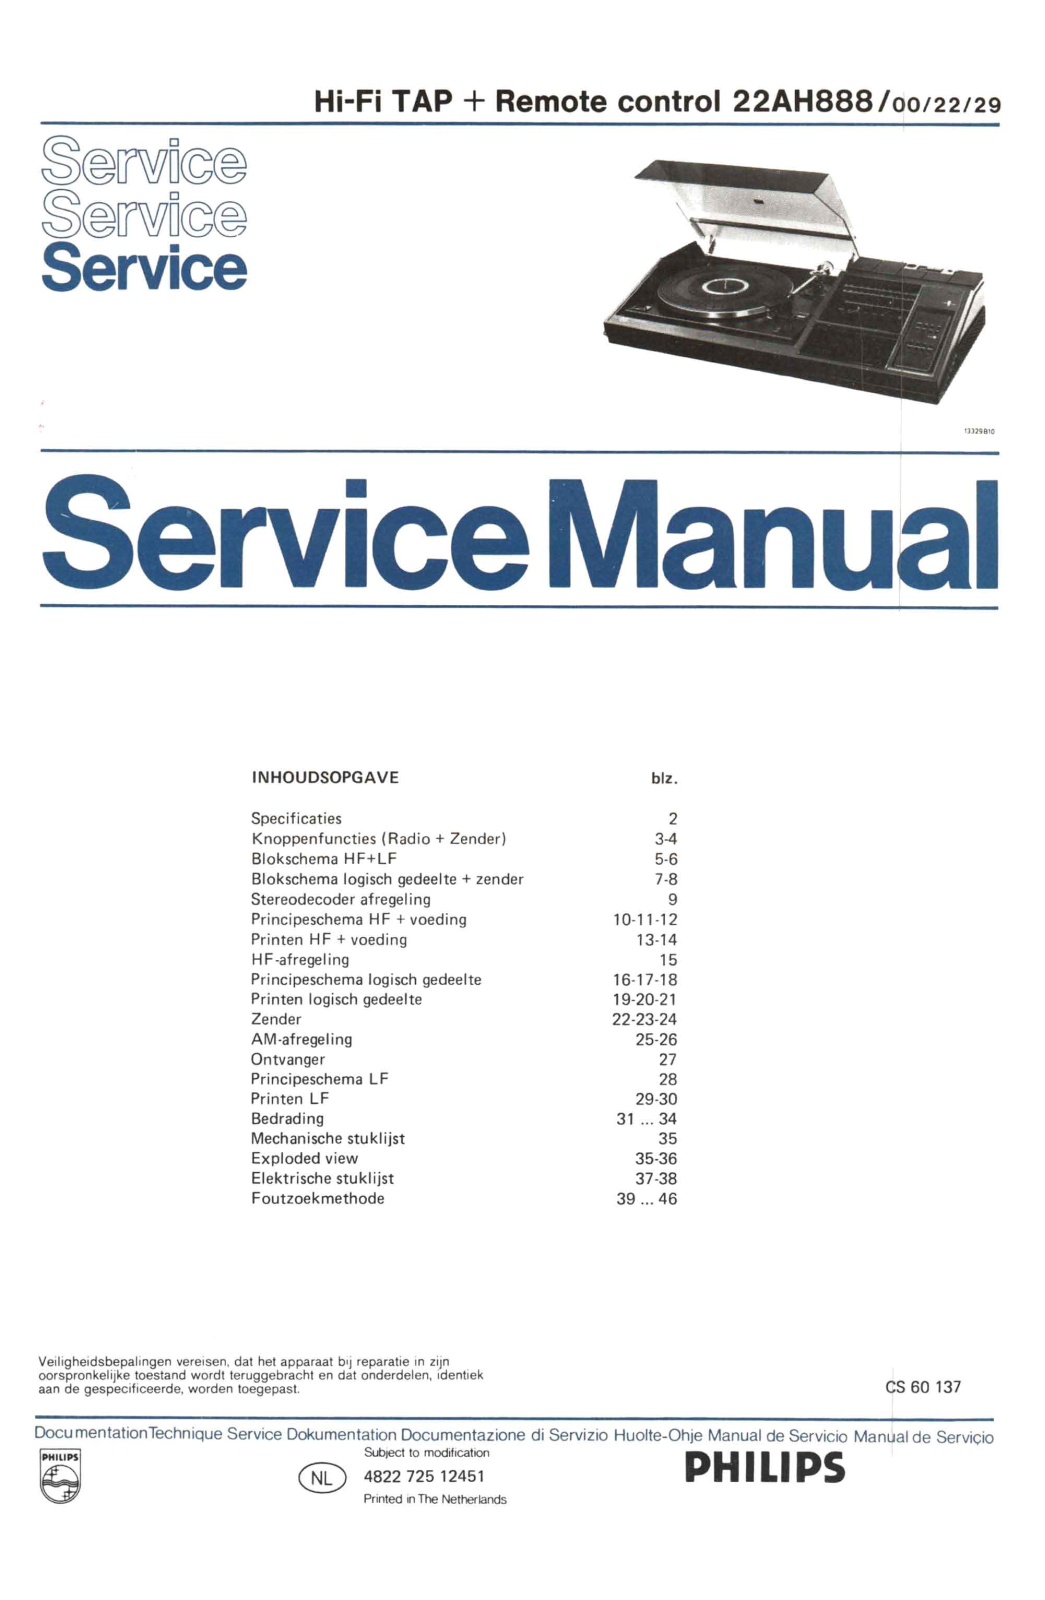 Philips AH-888 Service Manual